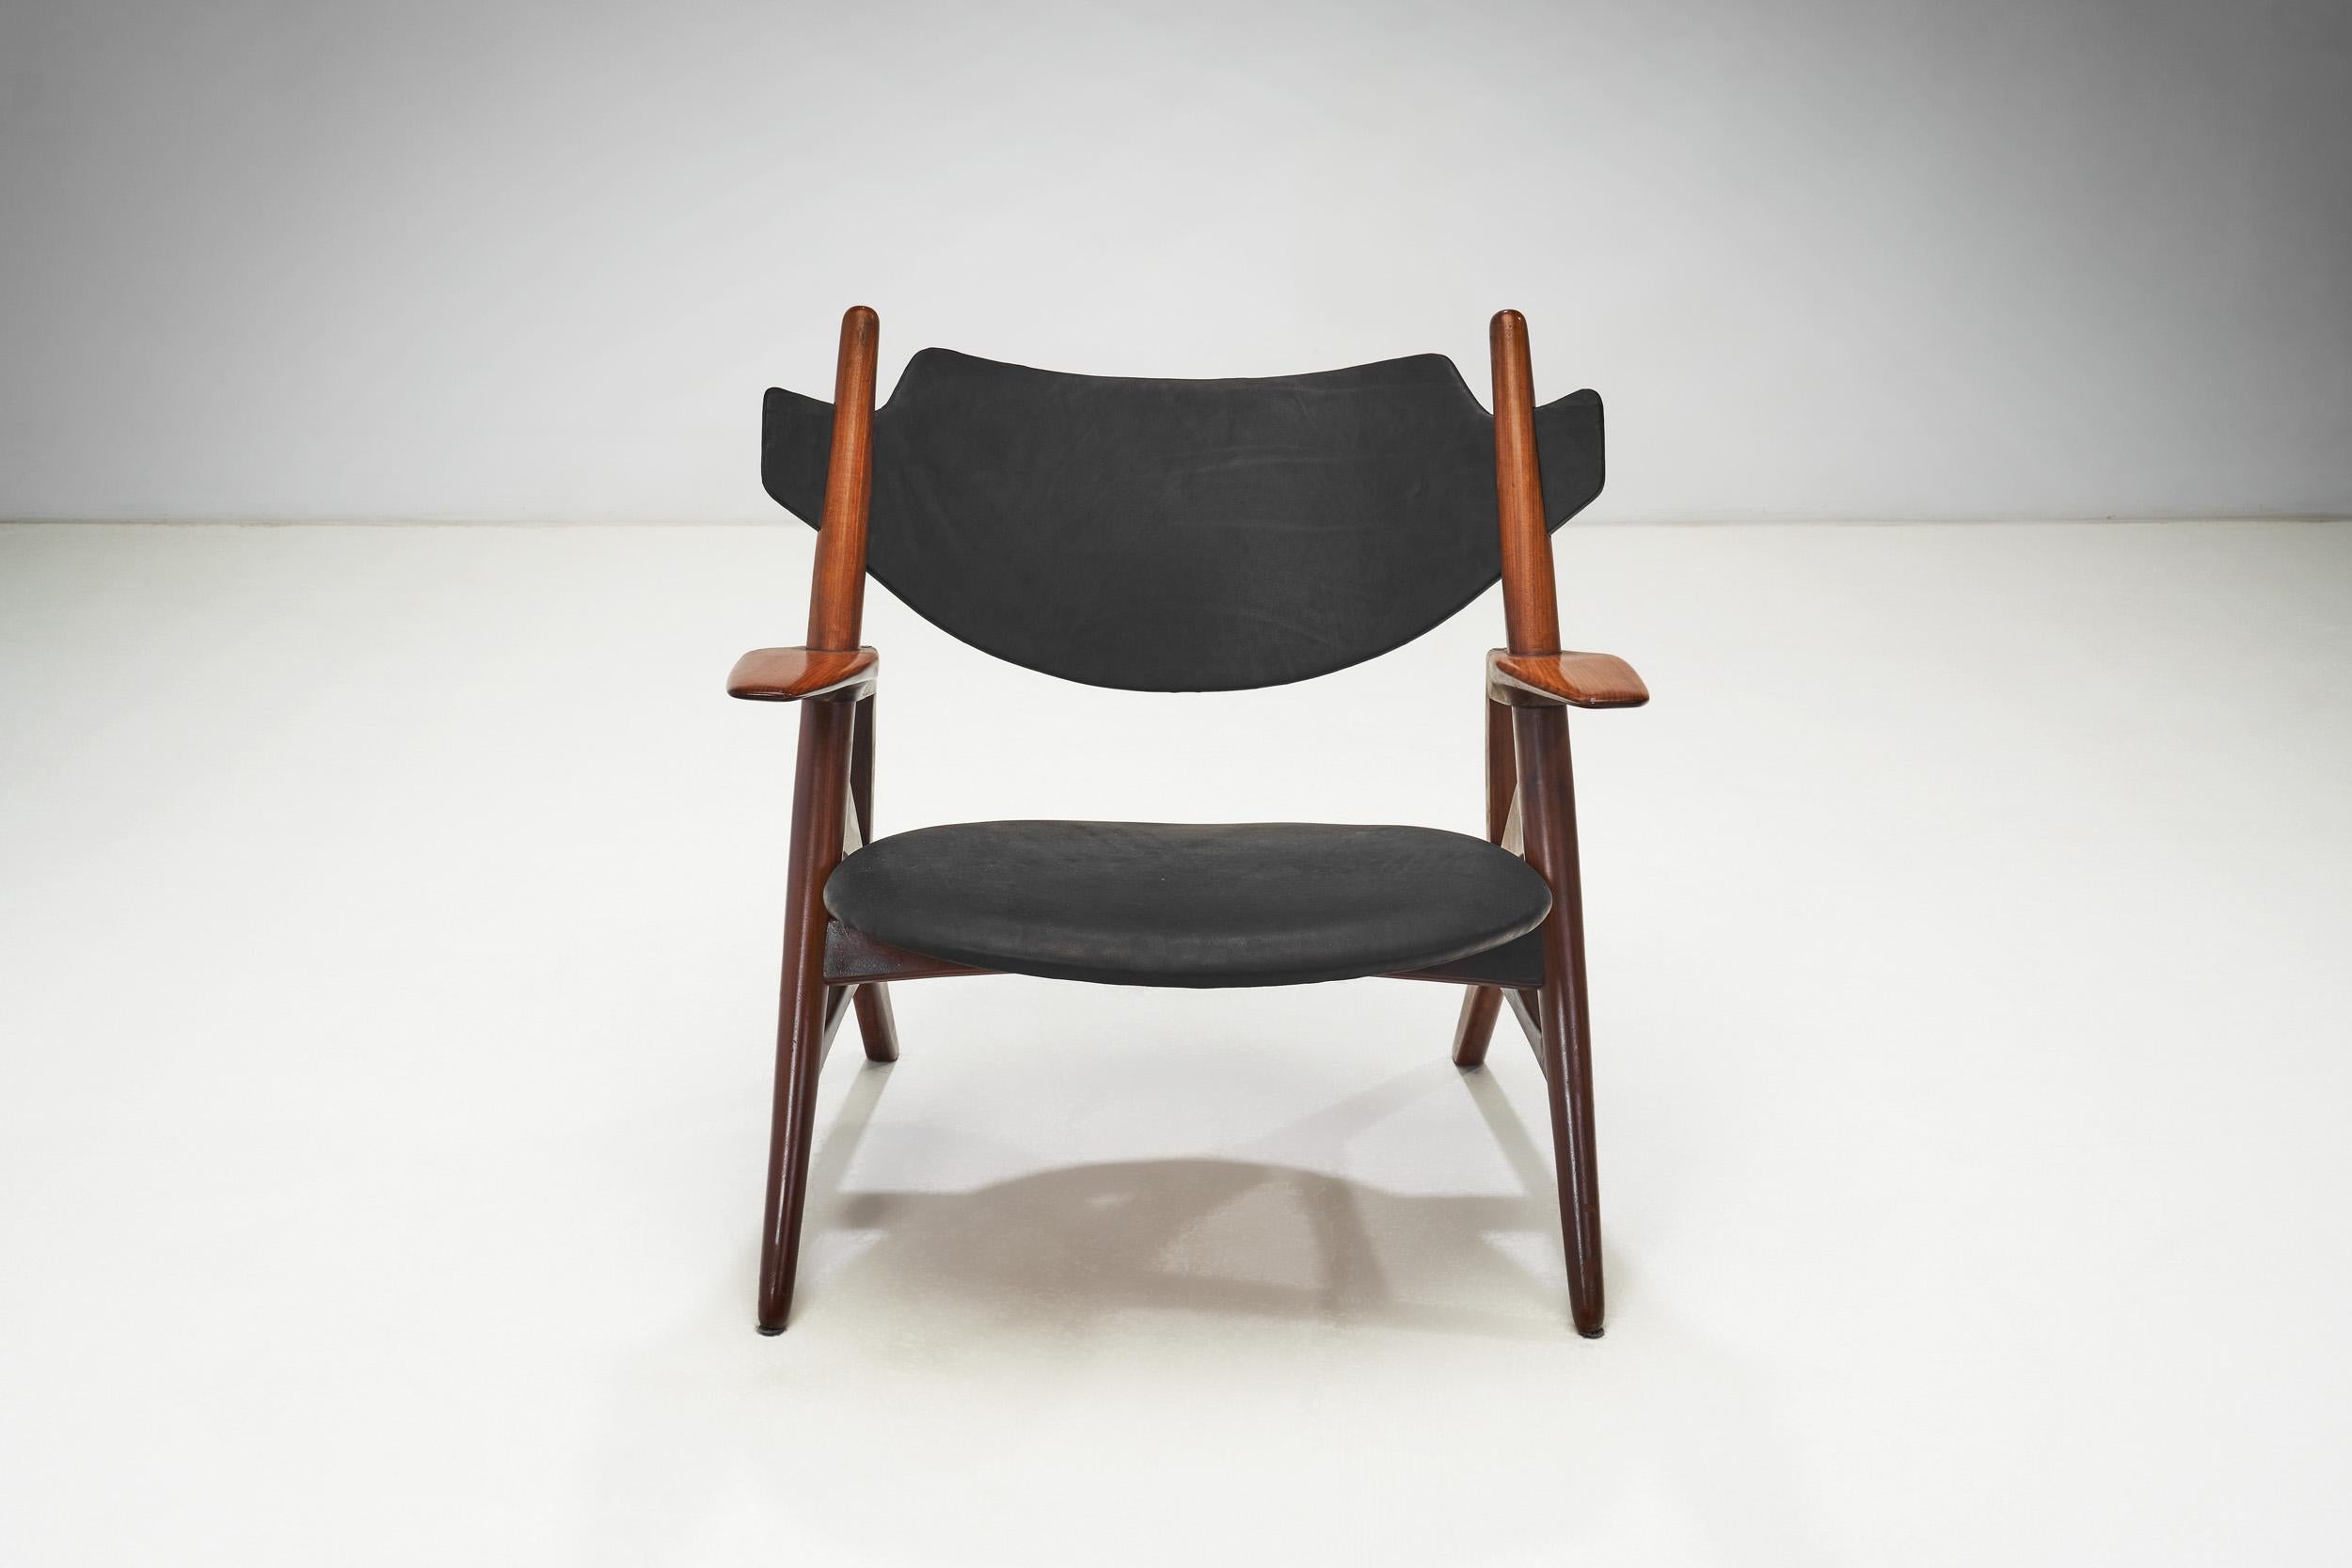 Sculptural Danish Mid-Century Modern Chair, Denmark ca 1960s For Sale 2